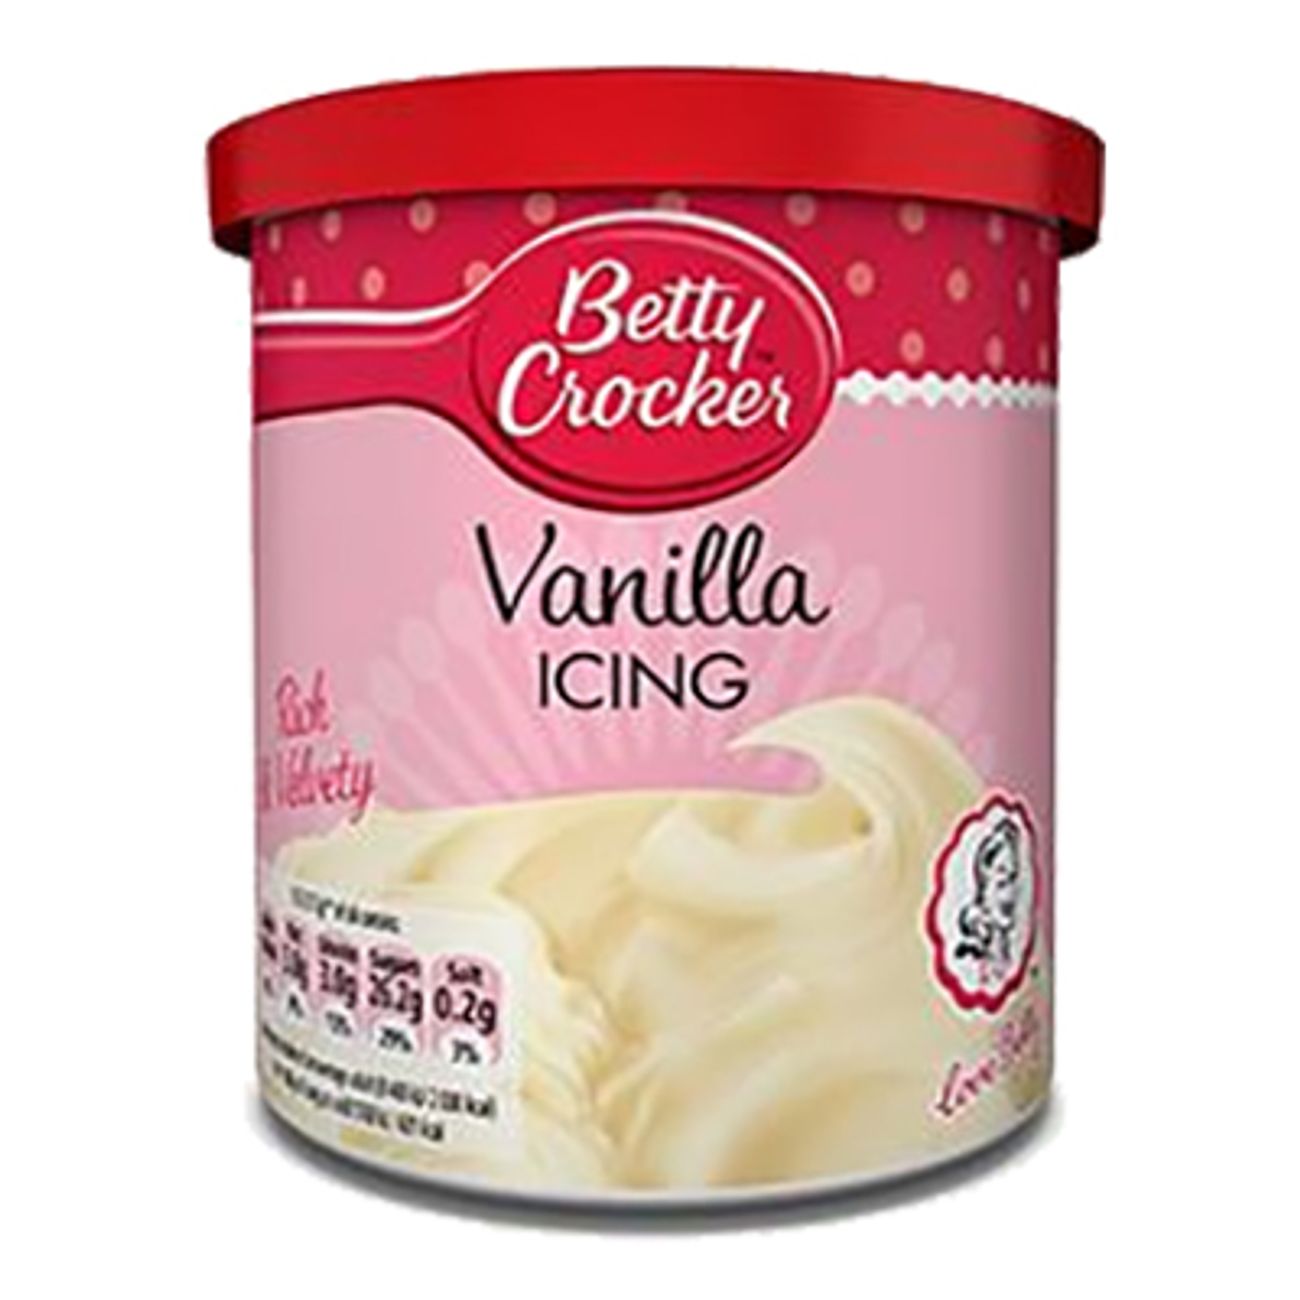 betty-crocker-vanilla-icing-1